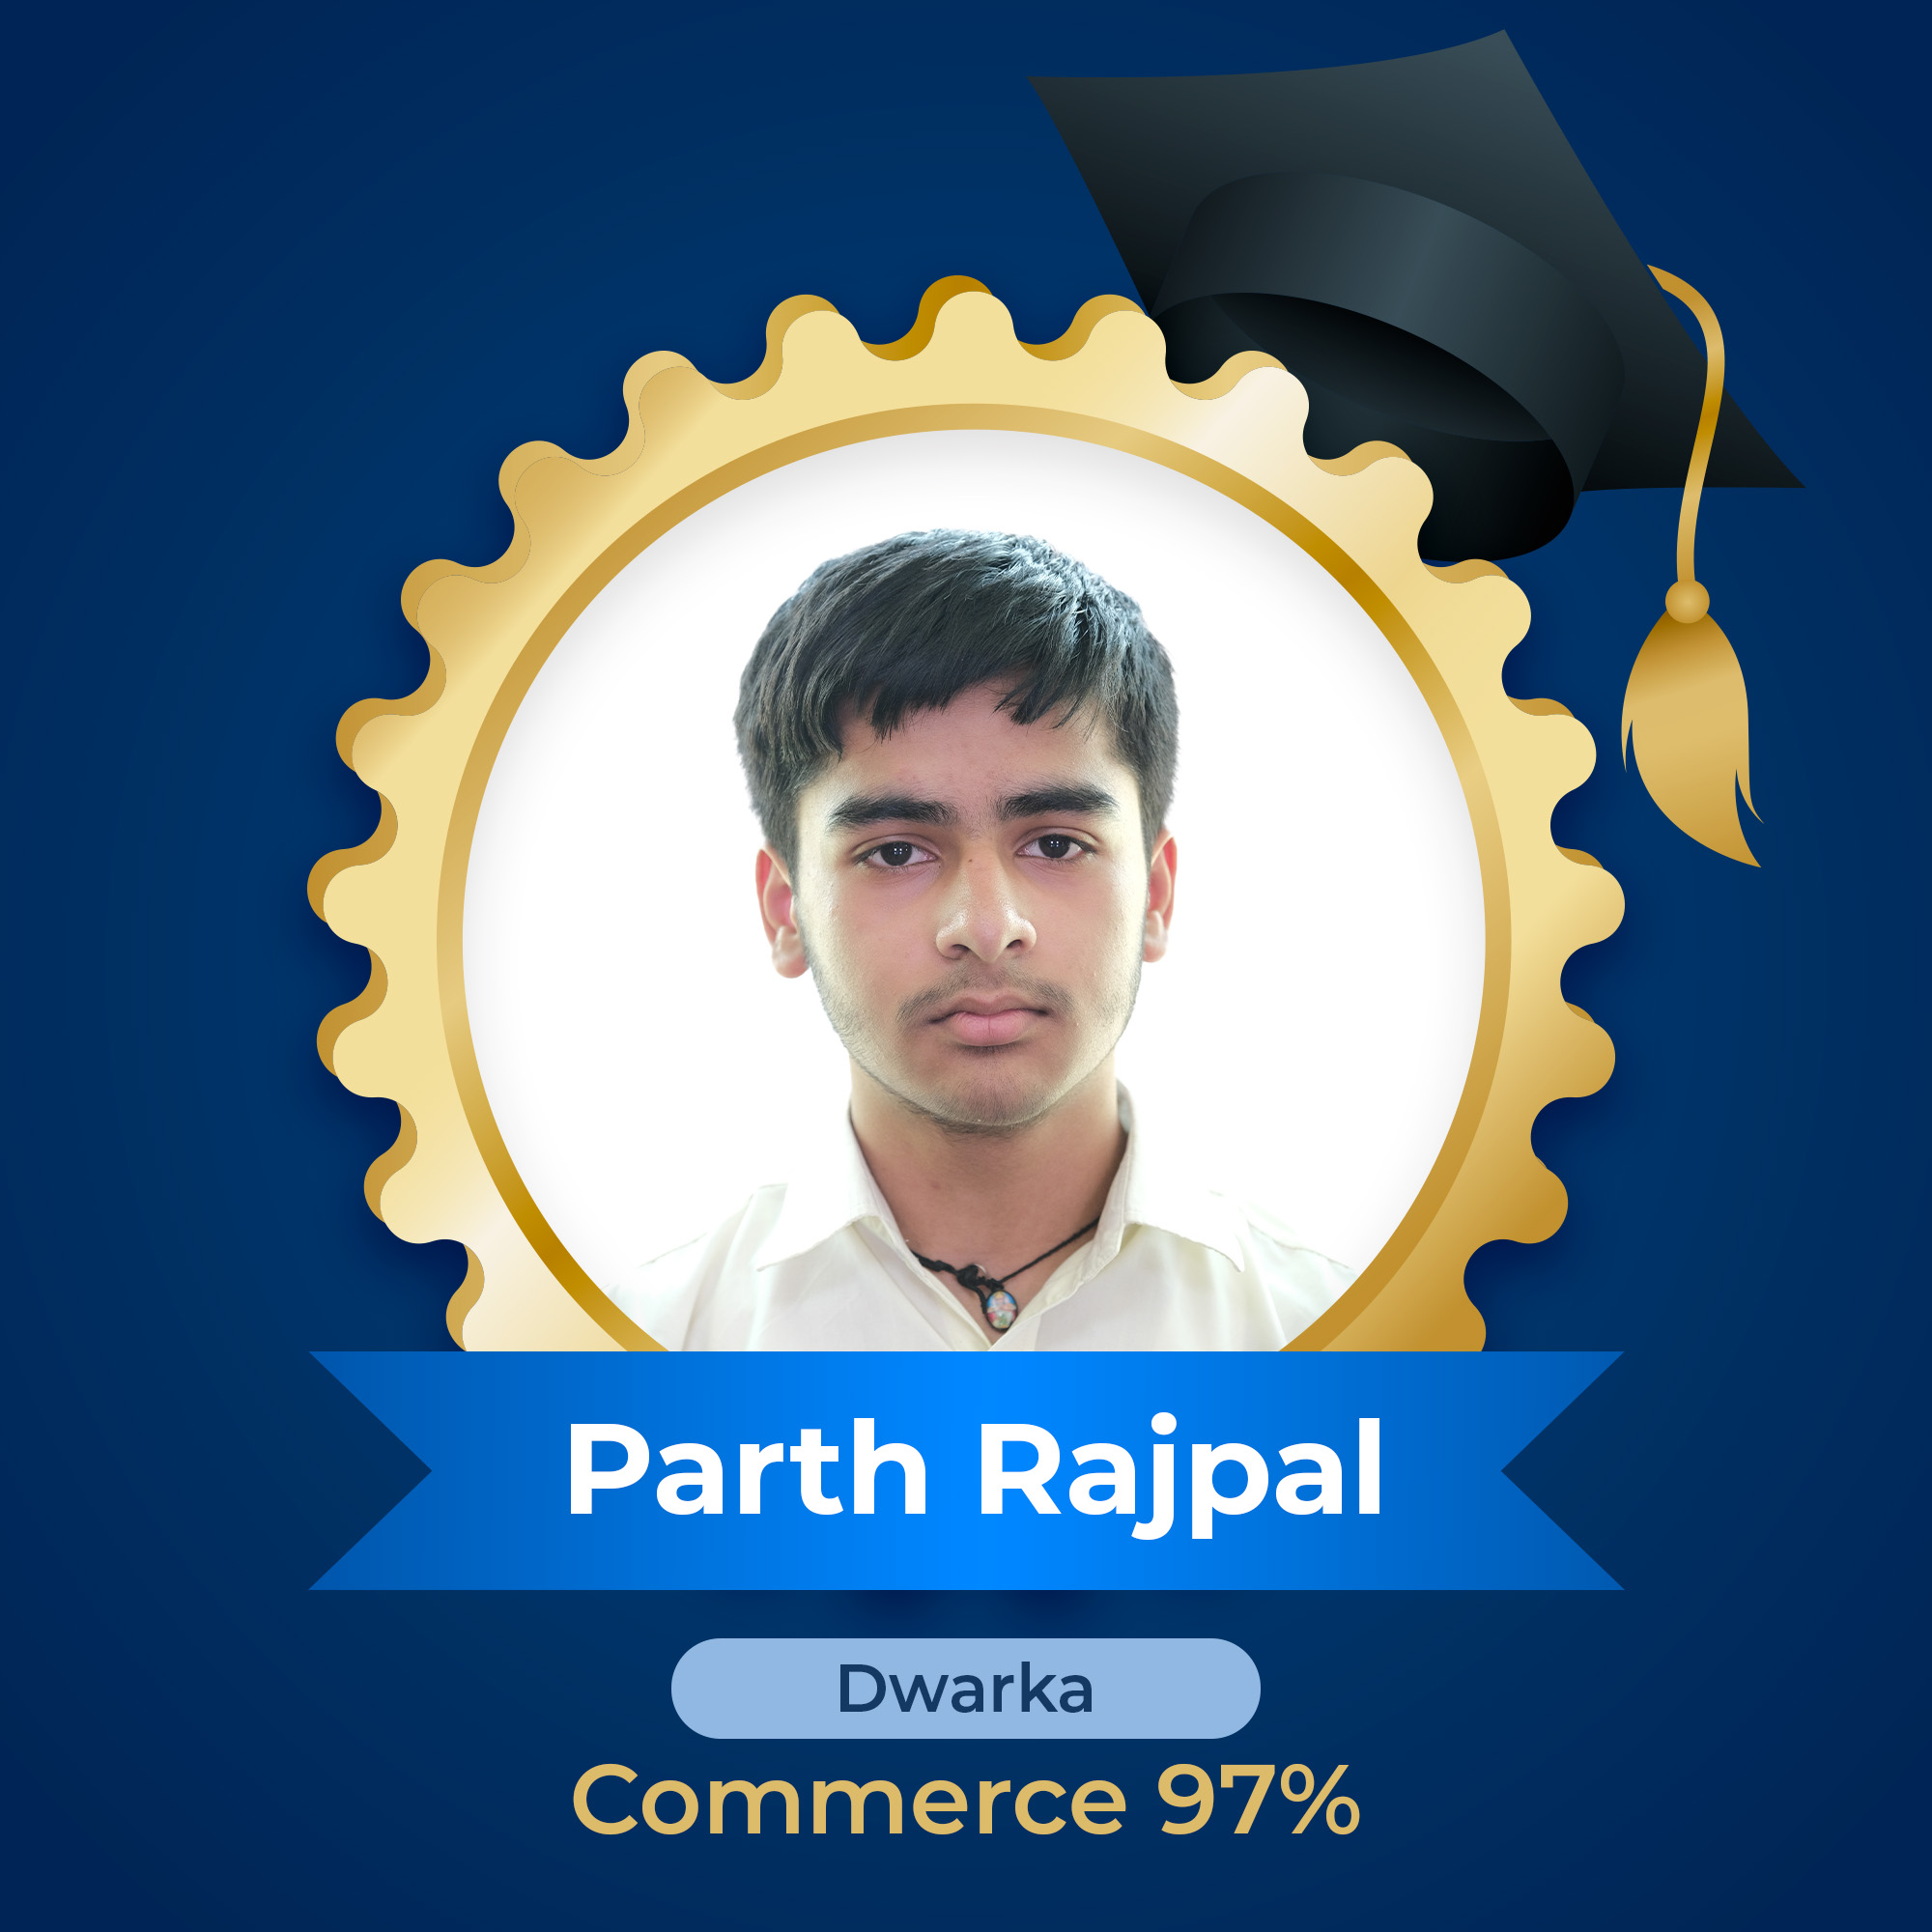 Parth Rajpal